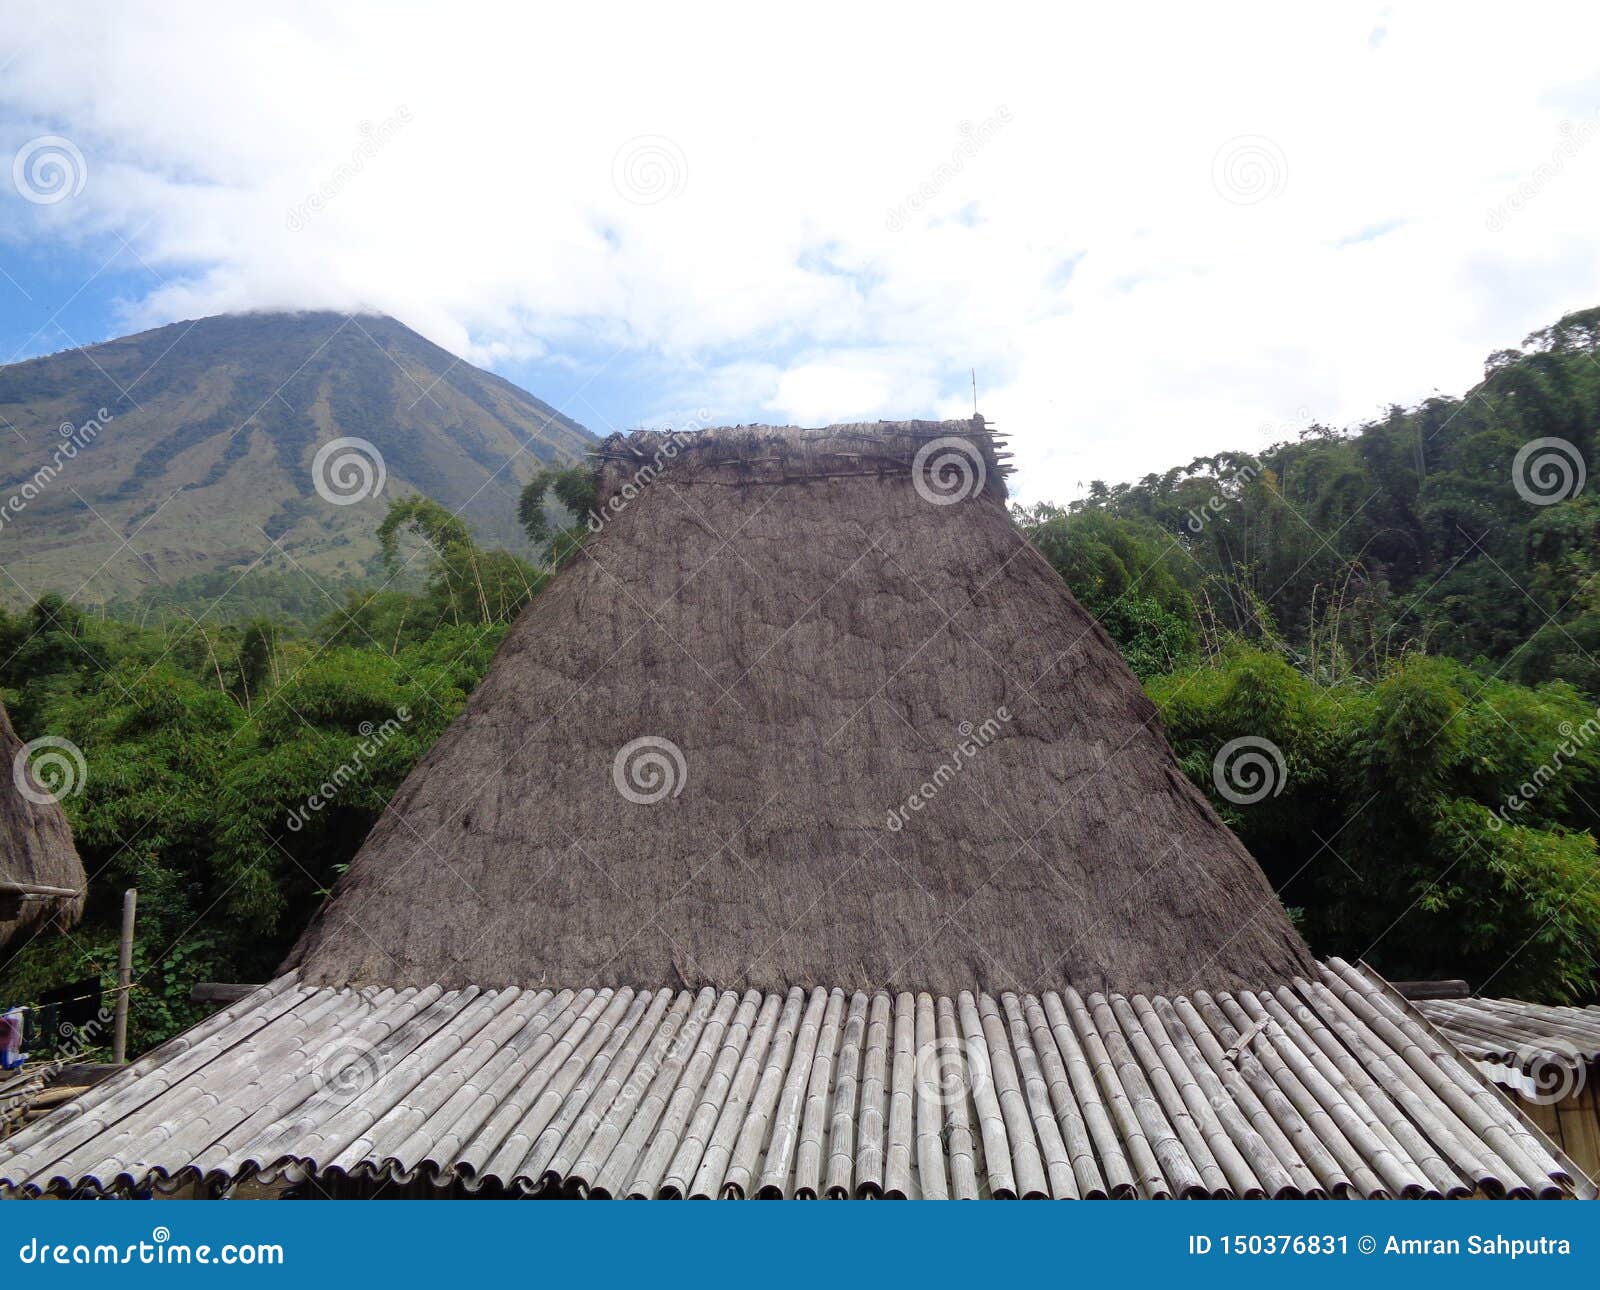 roof of bena bajawa traditional straw house